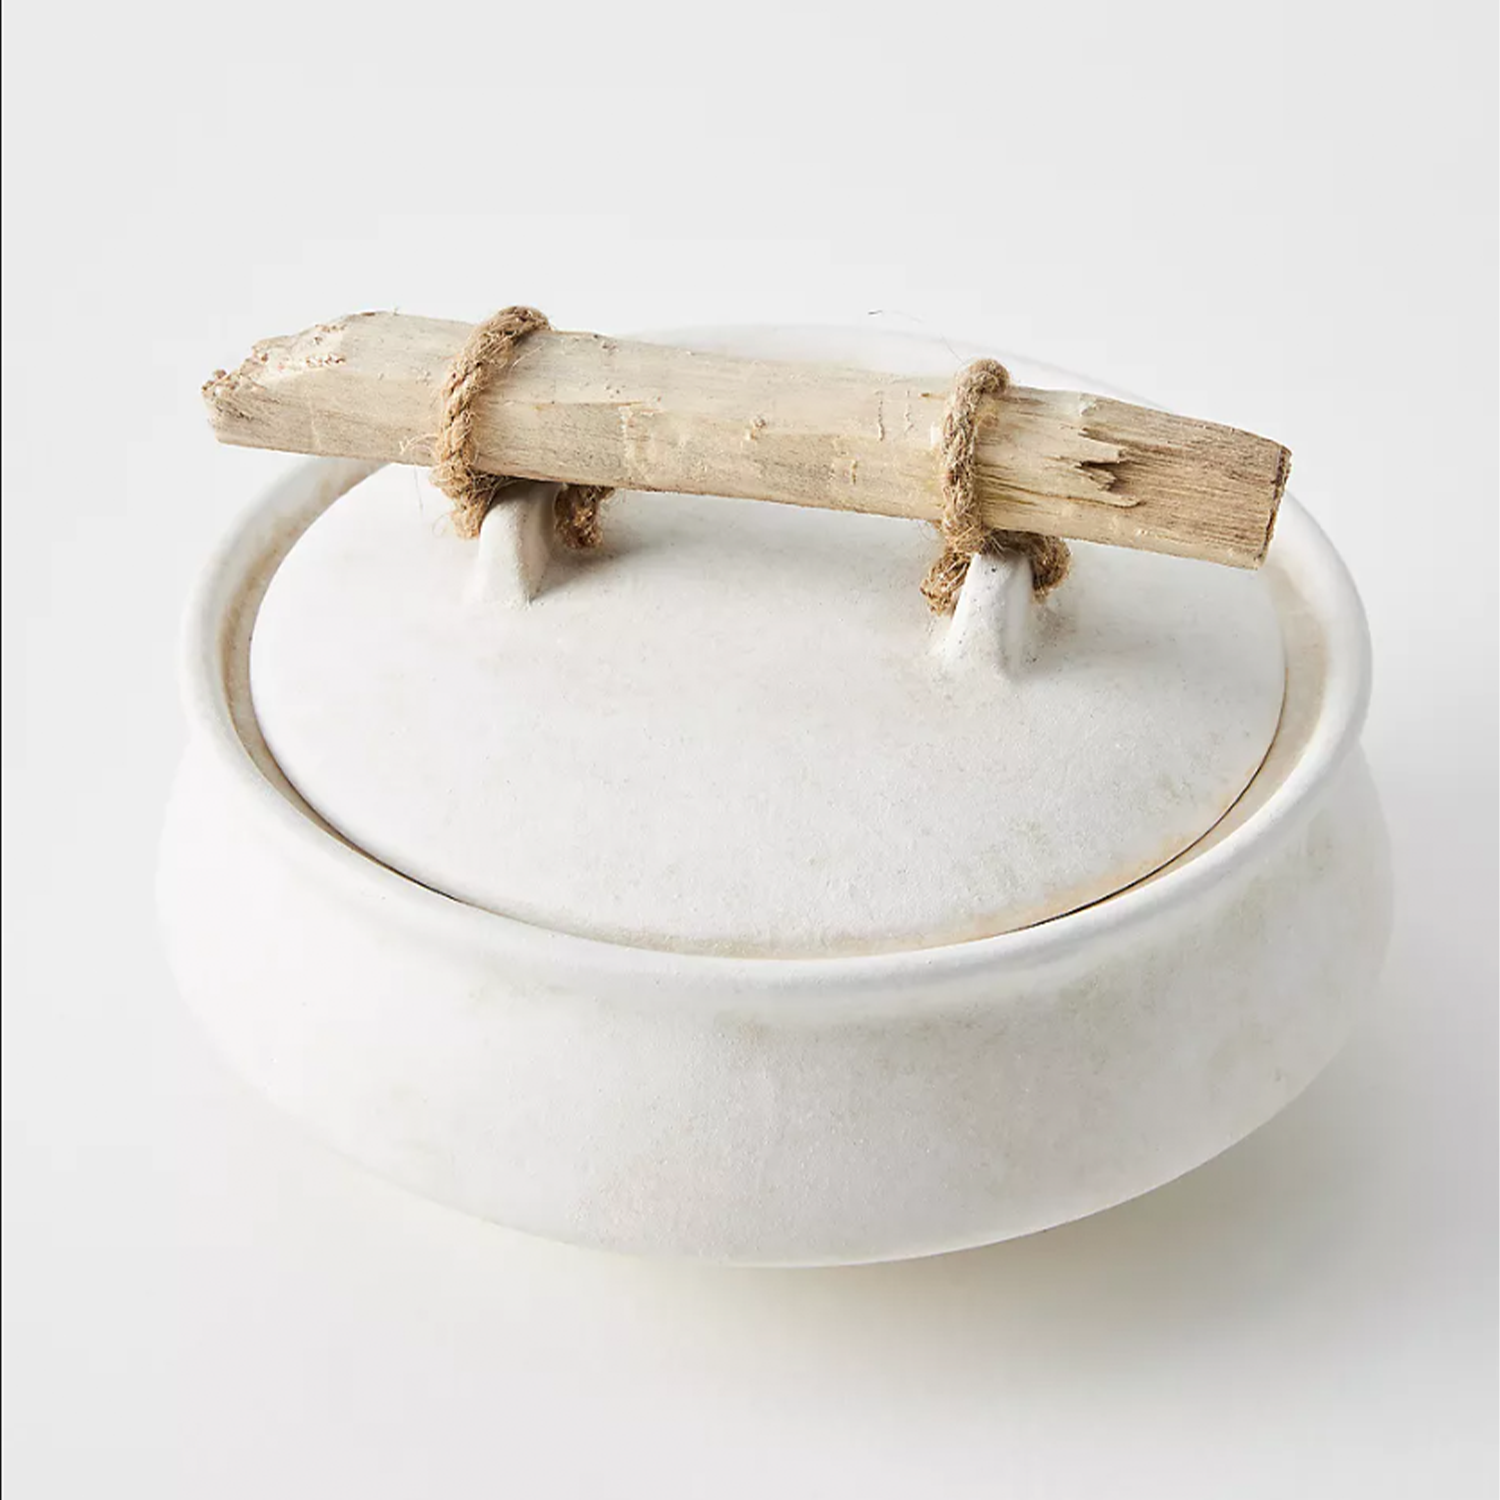 Cream white earthenware trinket dish with wood handle